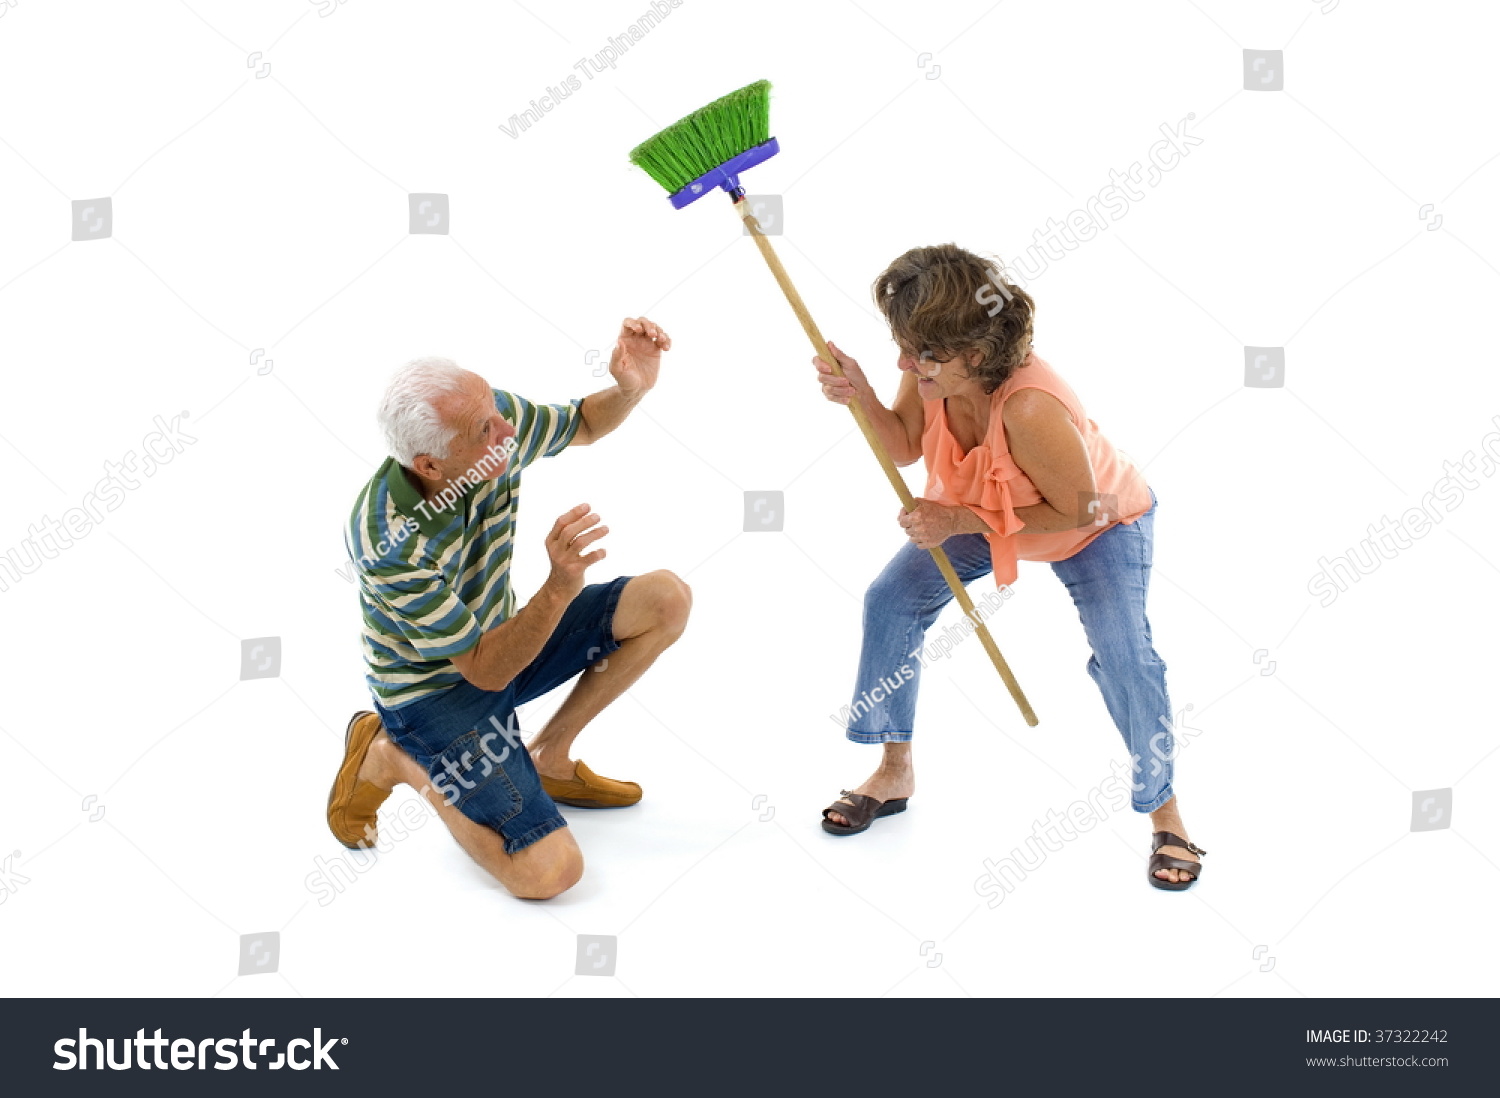 stock-photo-woman-beating-man-with-broom-37322242.jpg